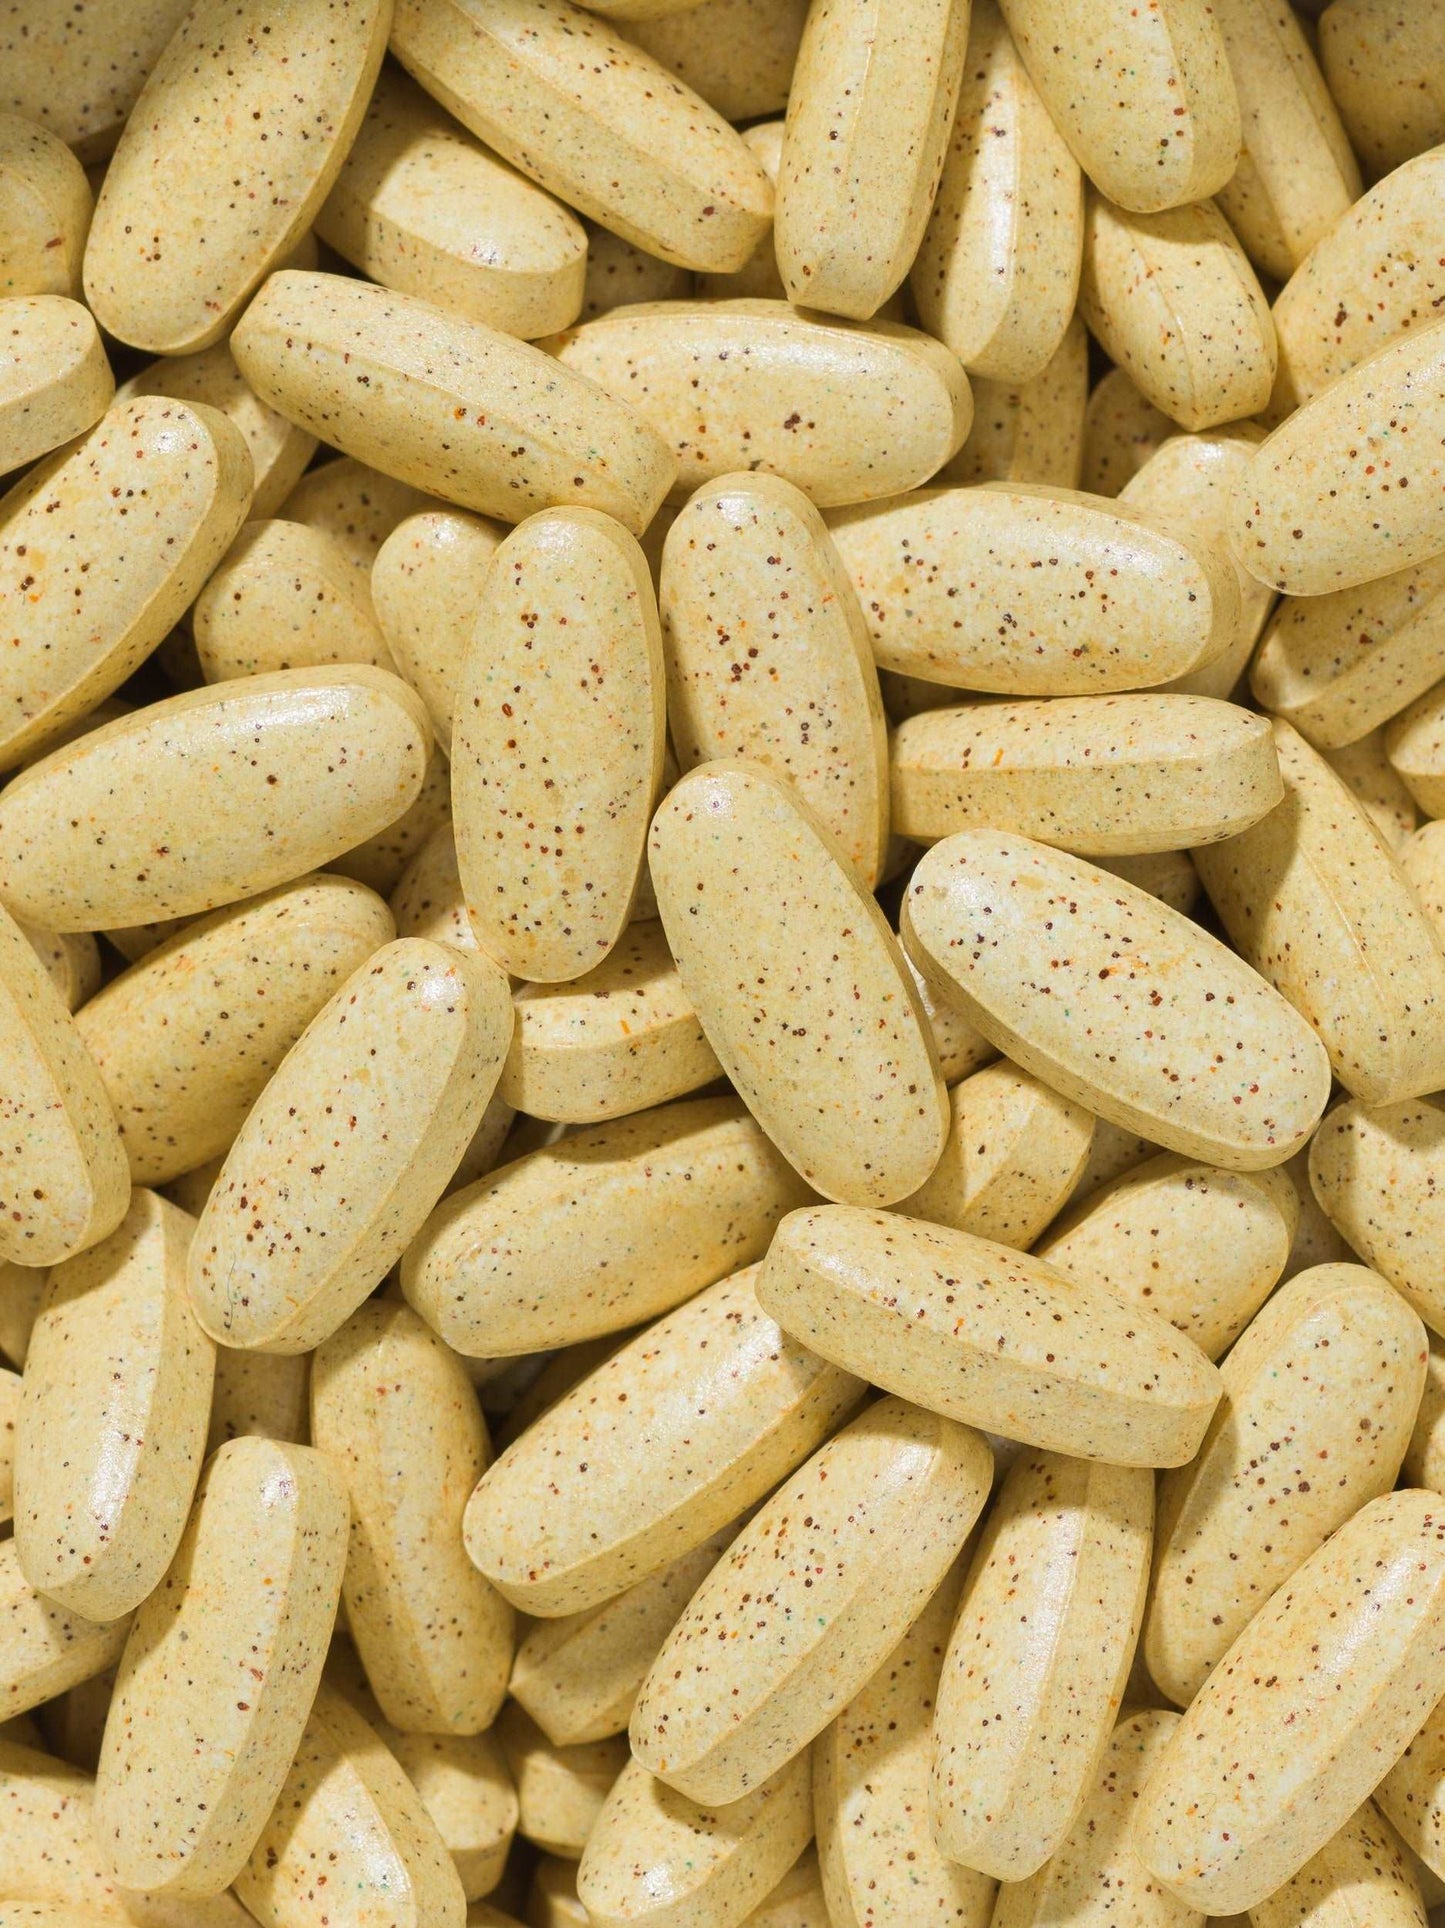 Lifepak - Multivitamin supplement from Pharmenex/Nu Skin